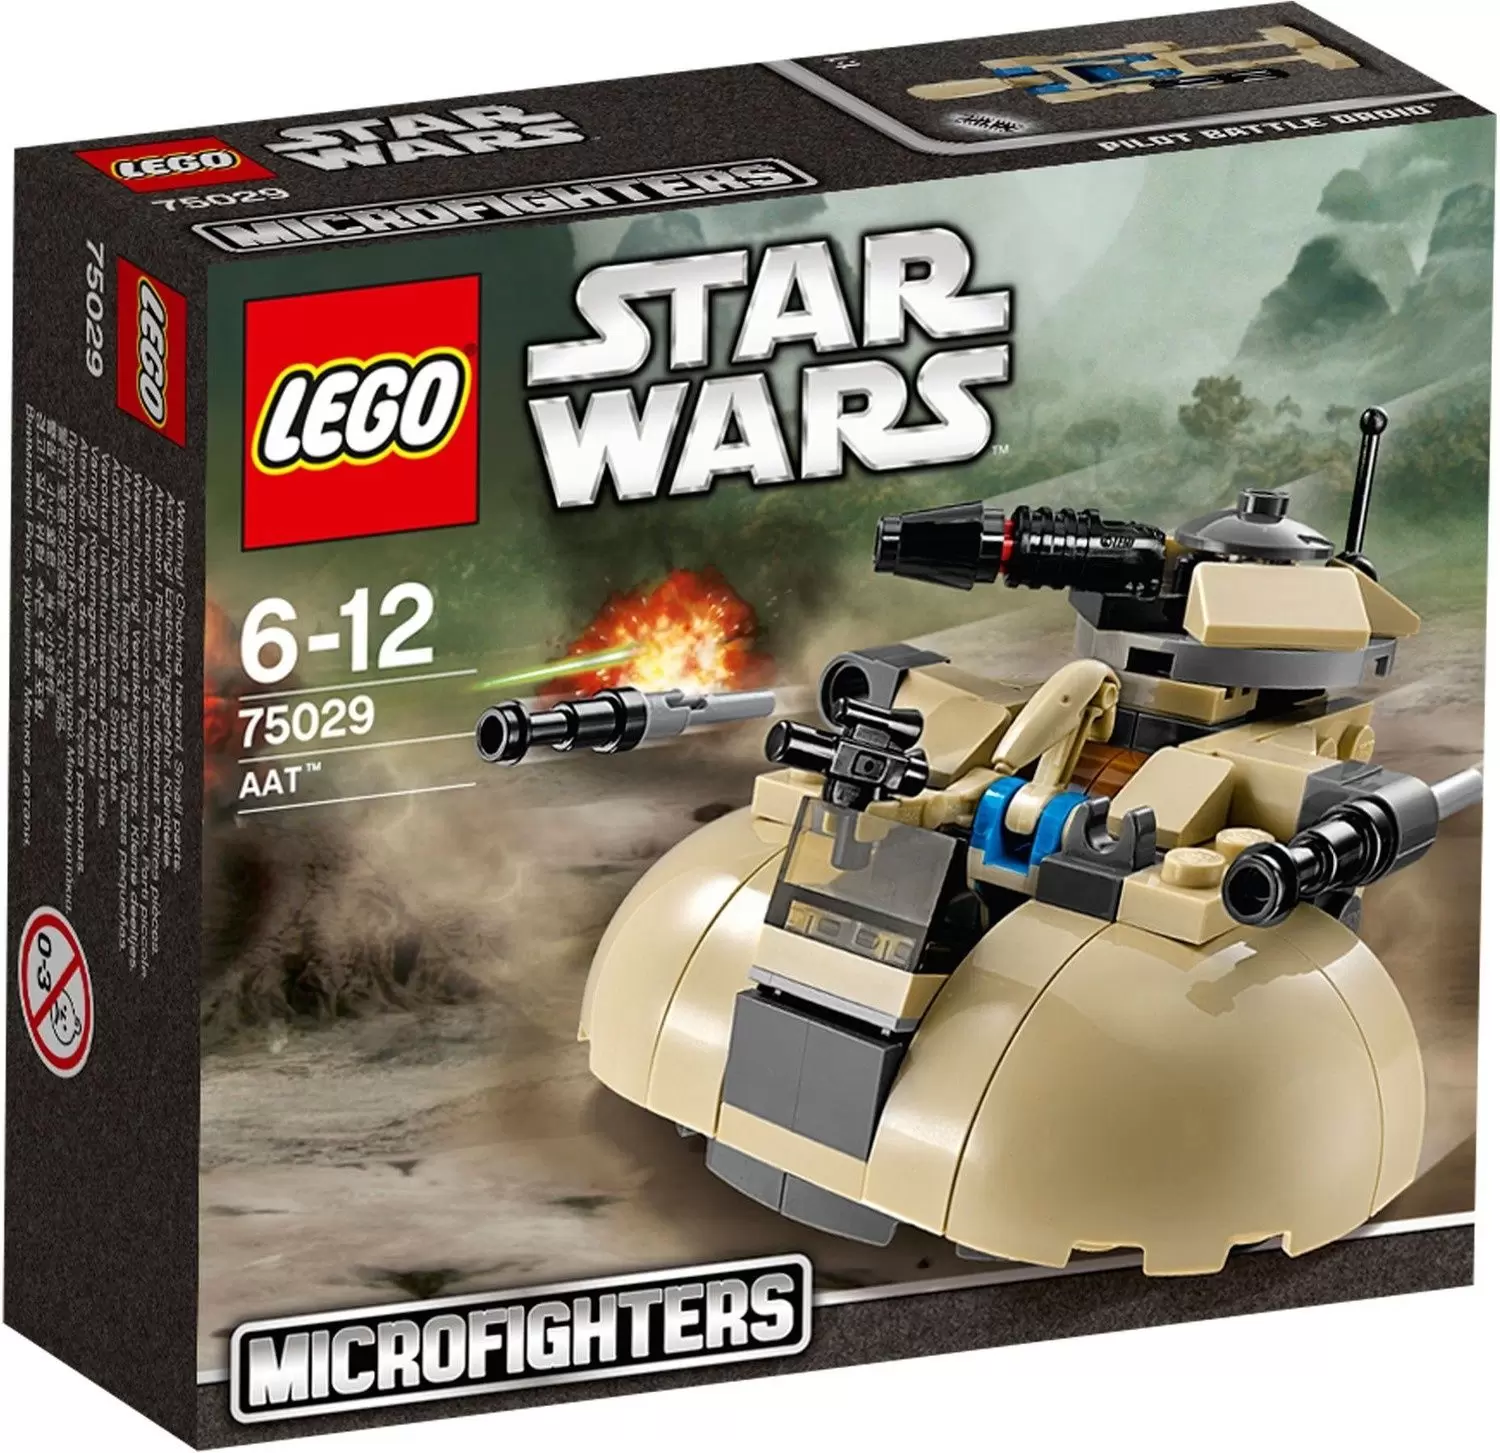 LEGO Star Wars - AAT (Microfighters)